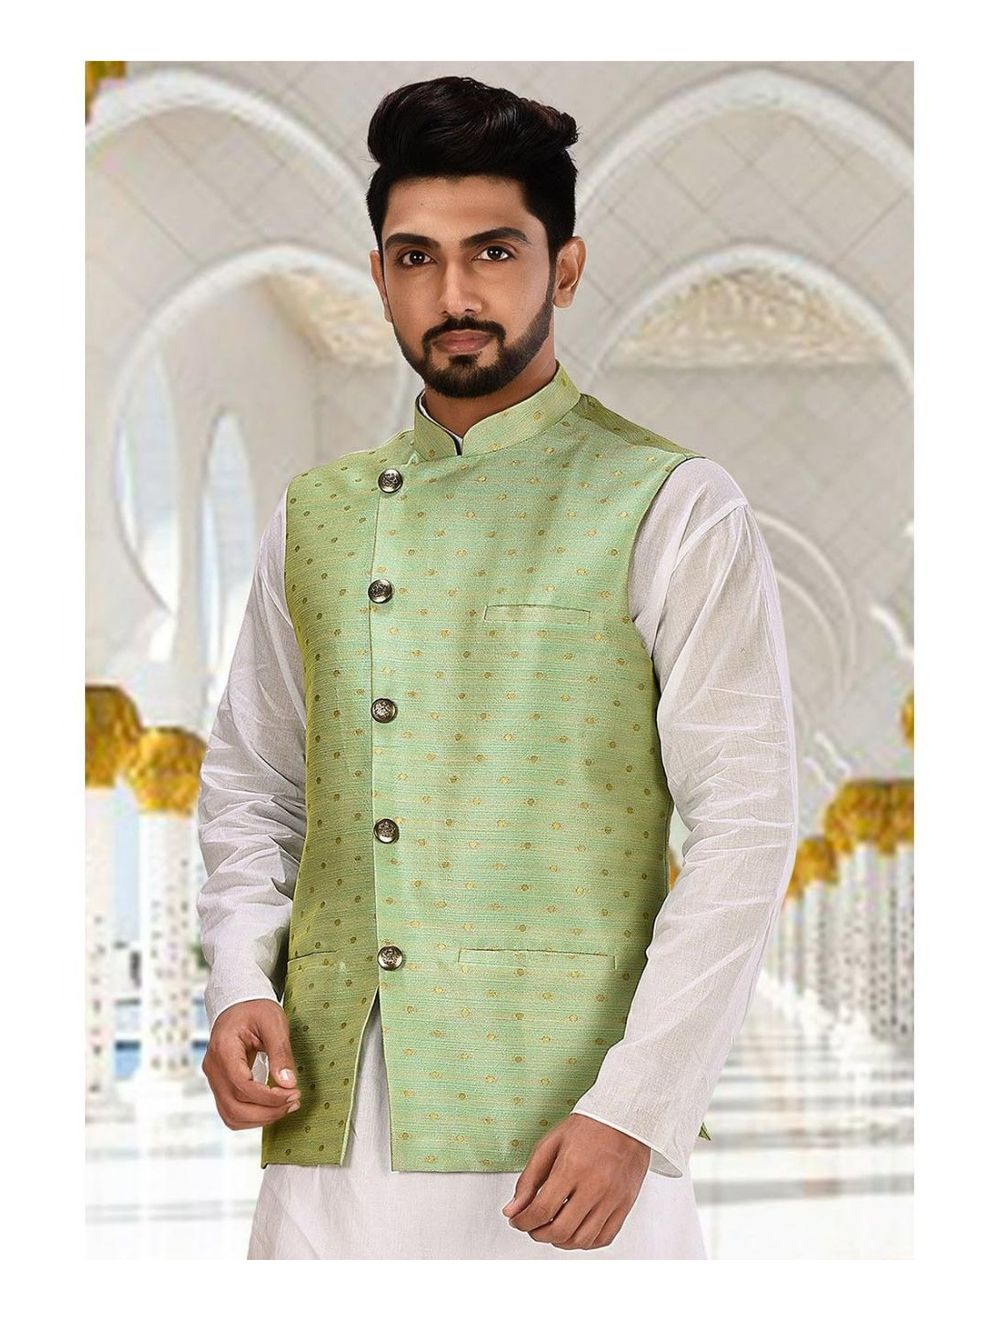 Men's Indian waistcoat modi jacket nehru style fancy koti ethnic outfit  MJ-950 | eBay